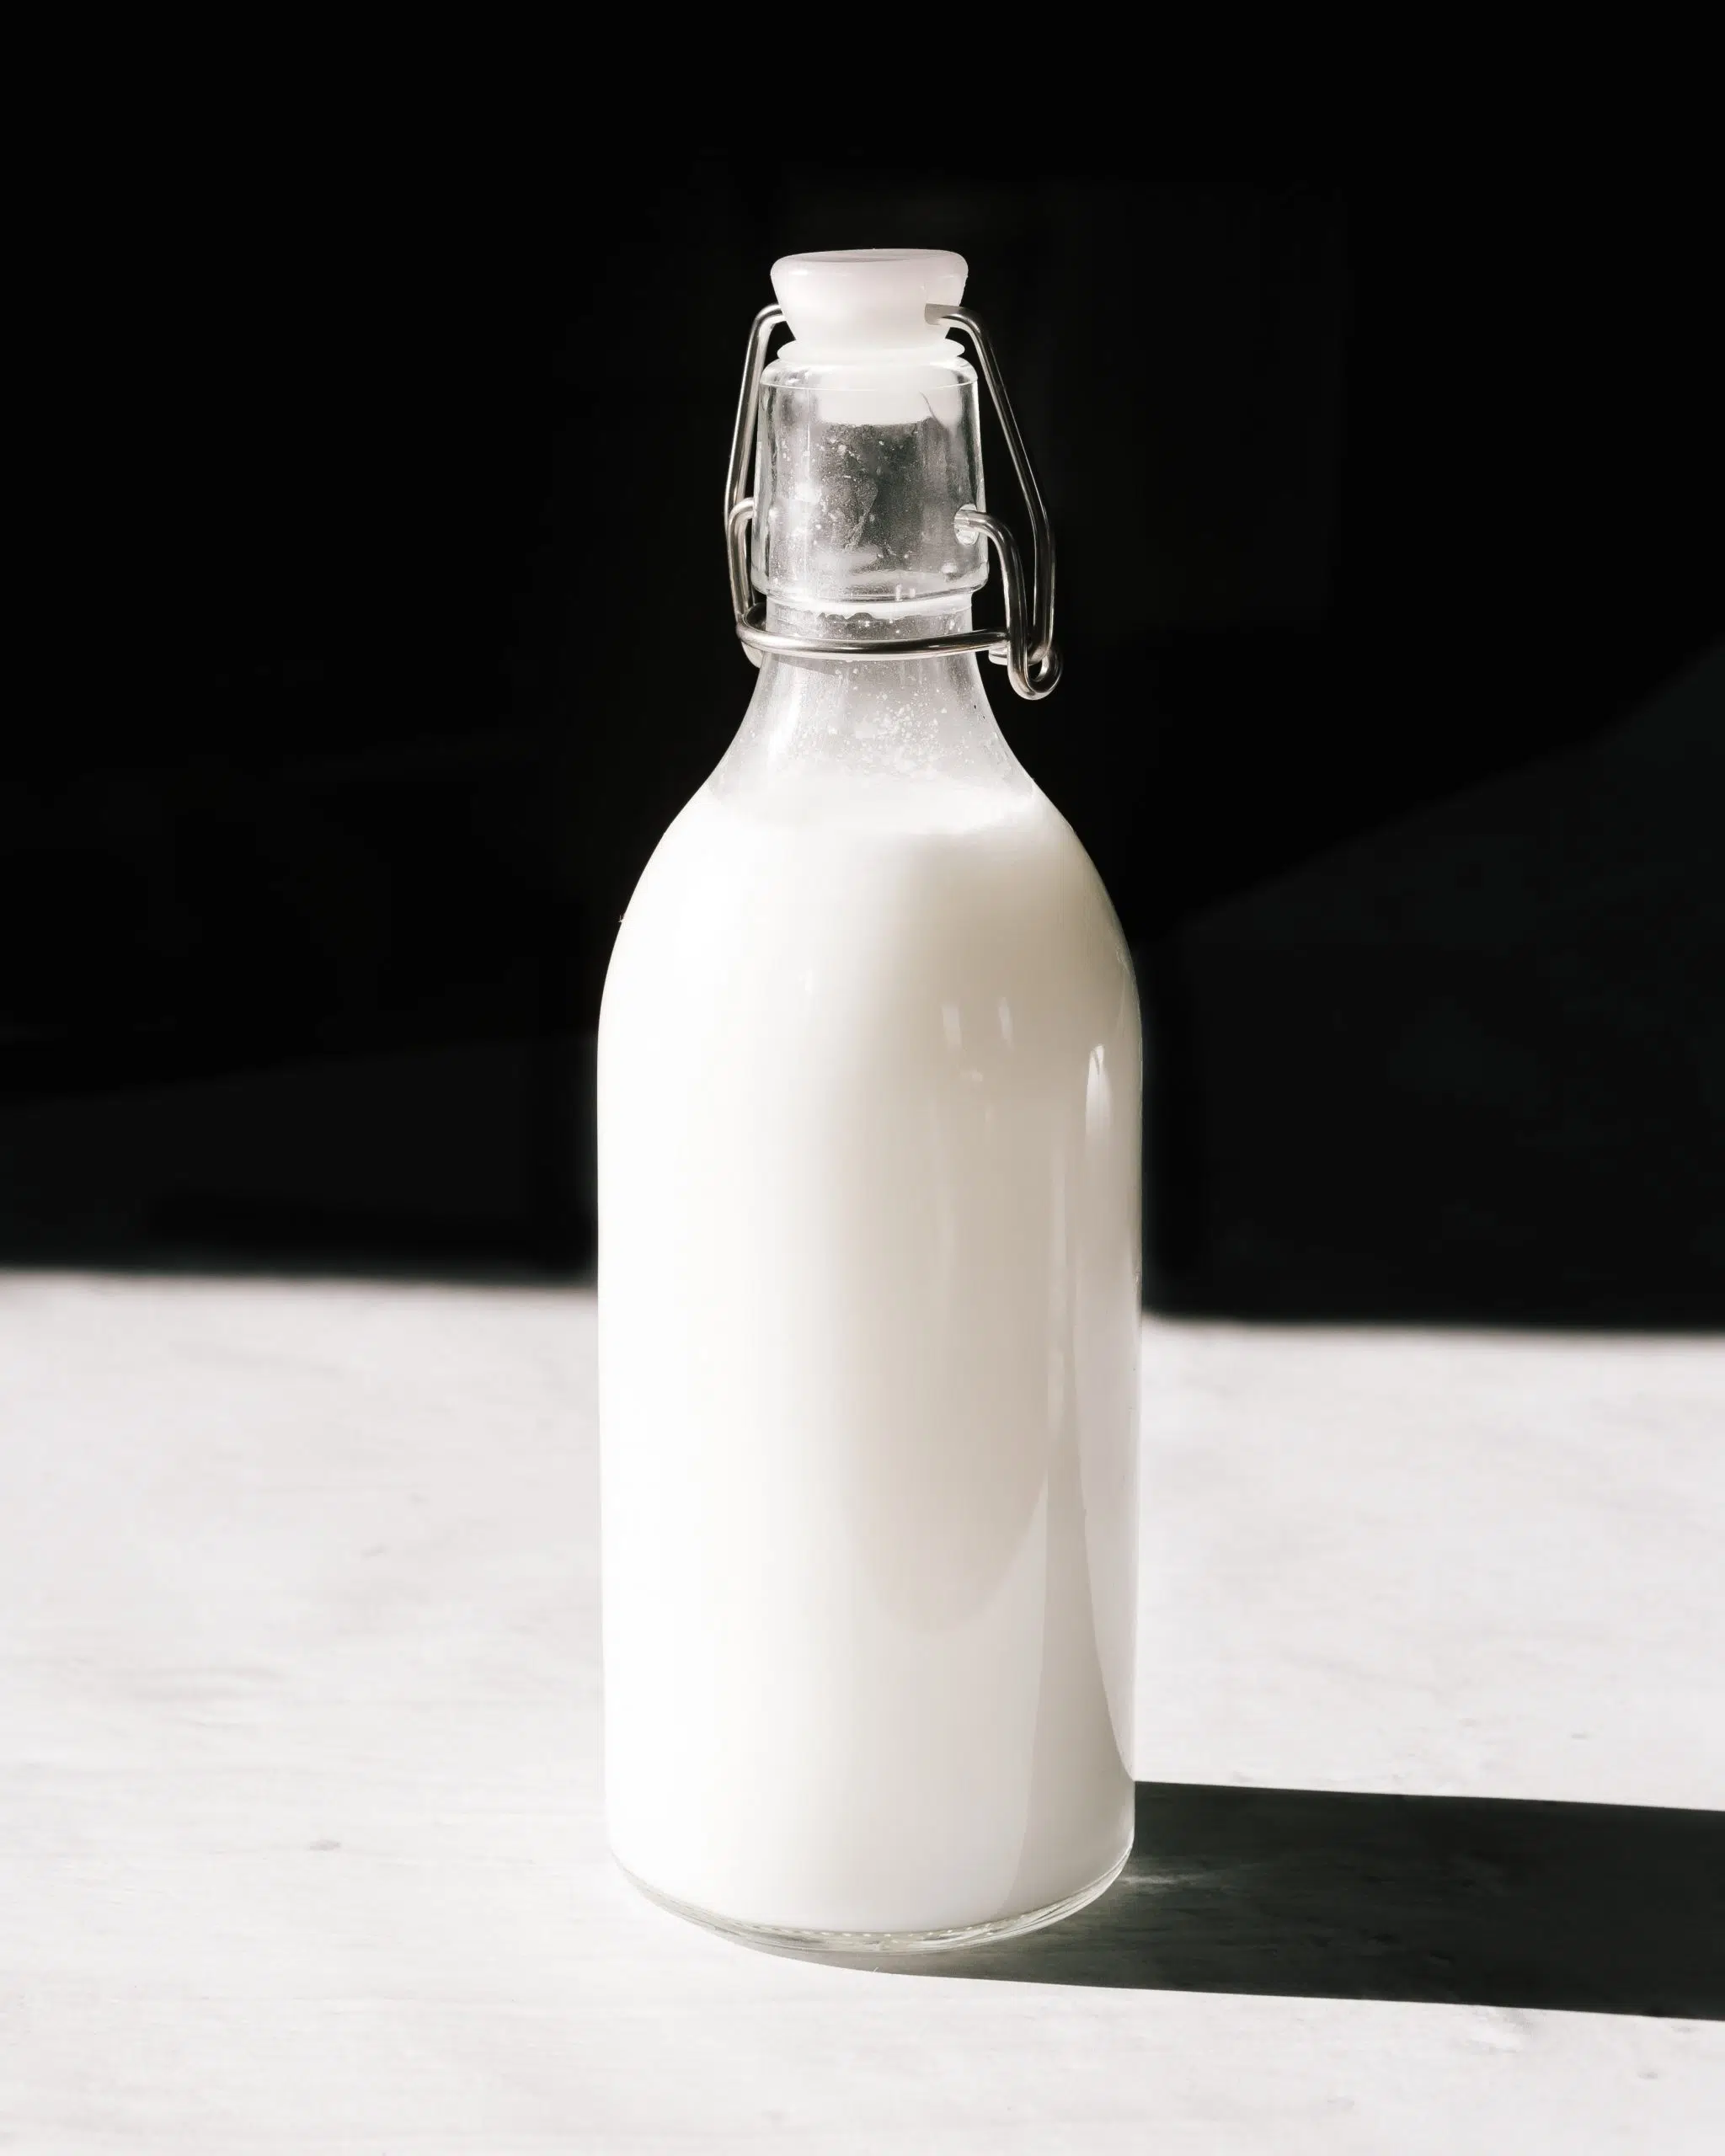 Durham Area Raw Milk Farm Raided By Provincial Regulators